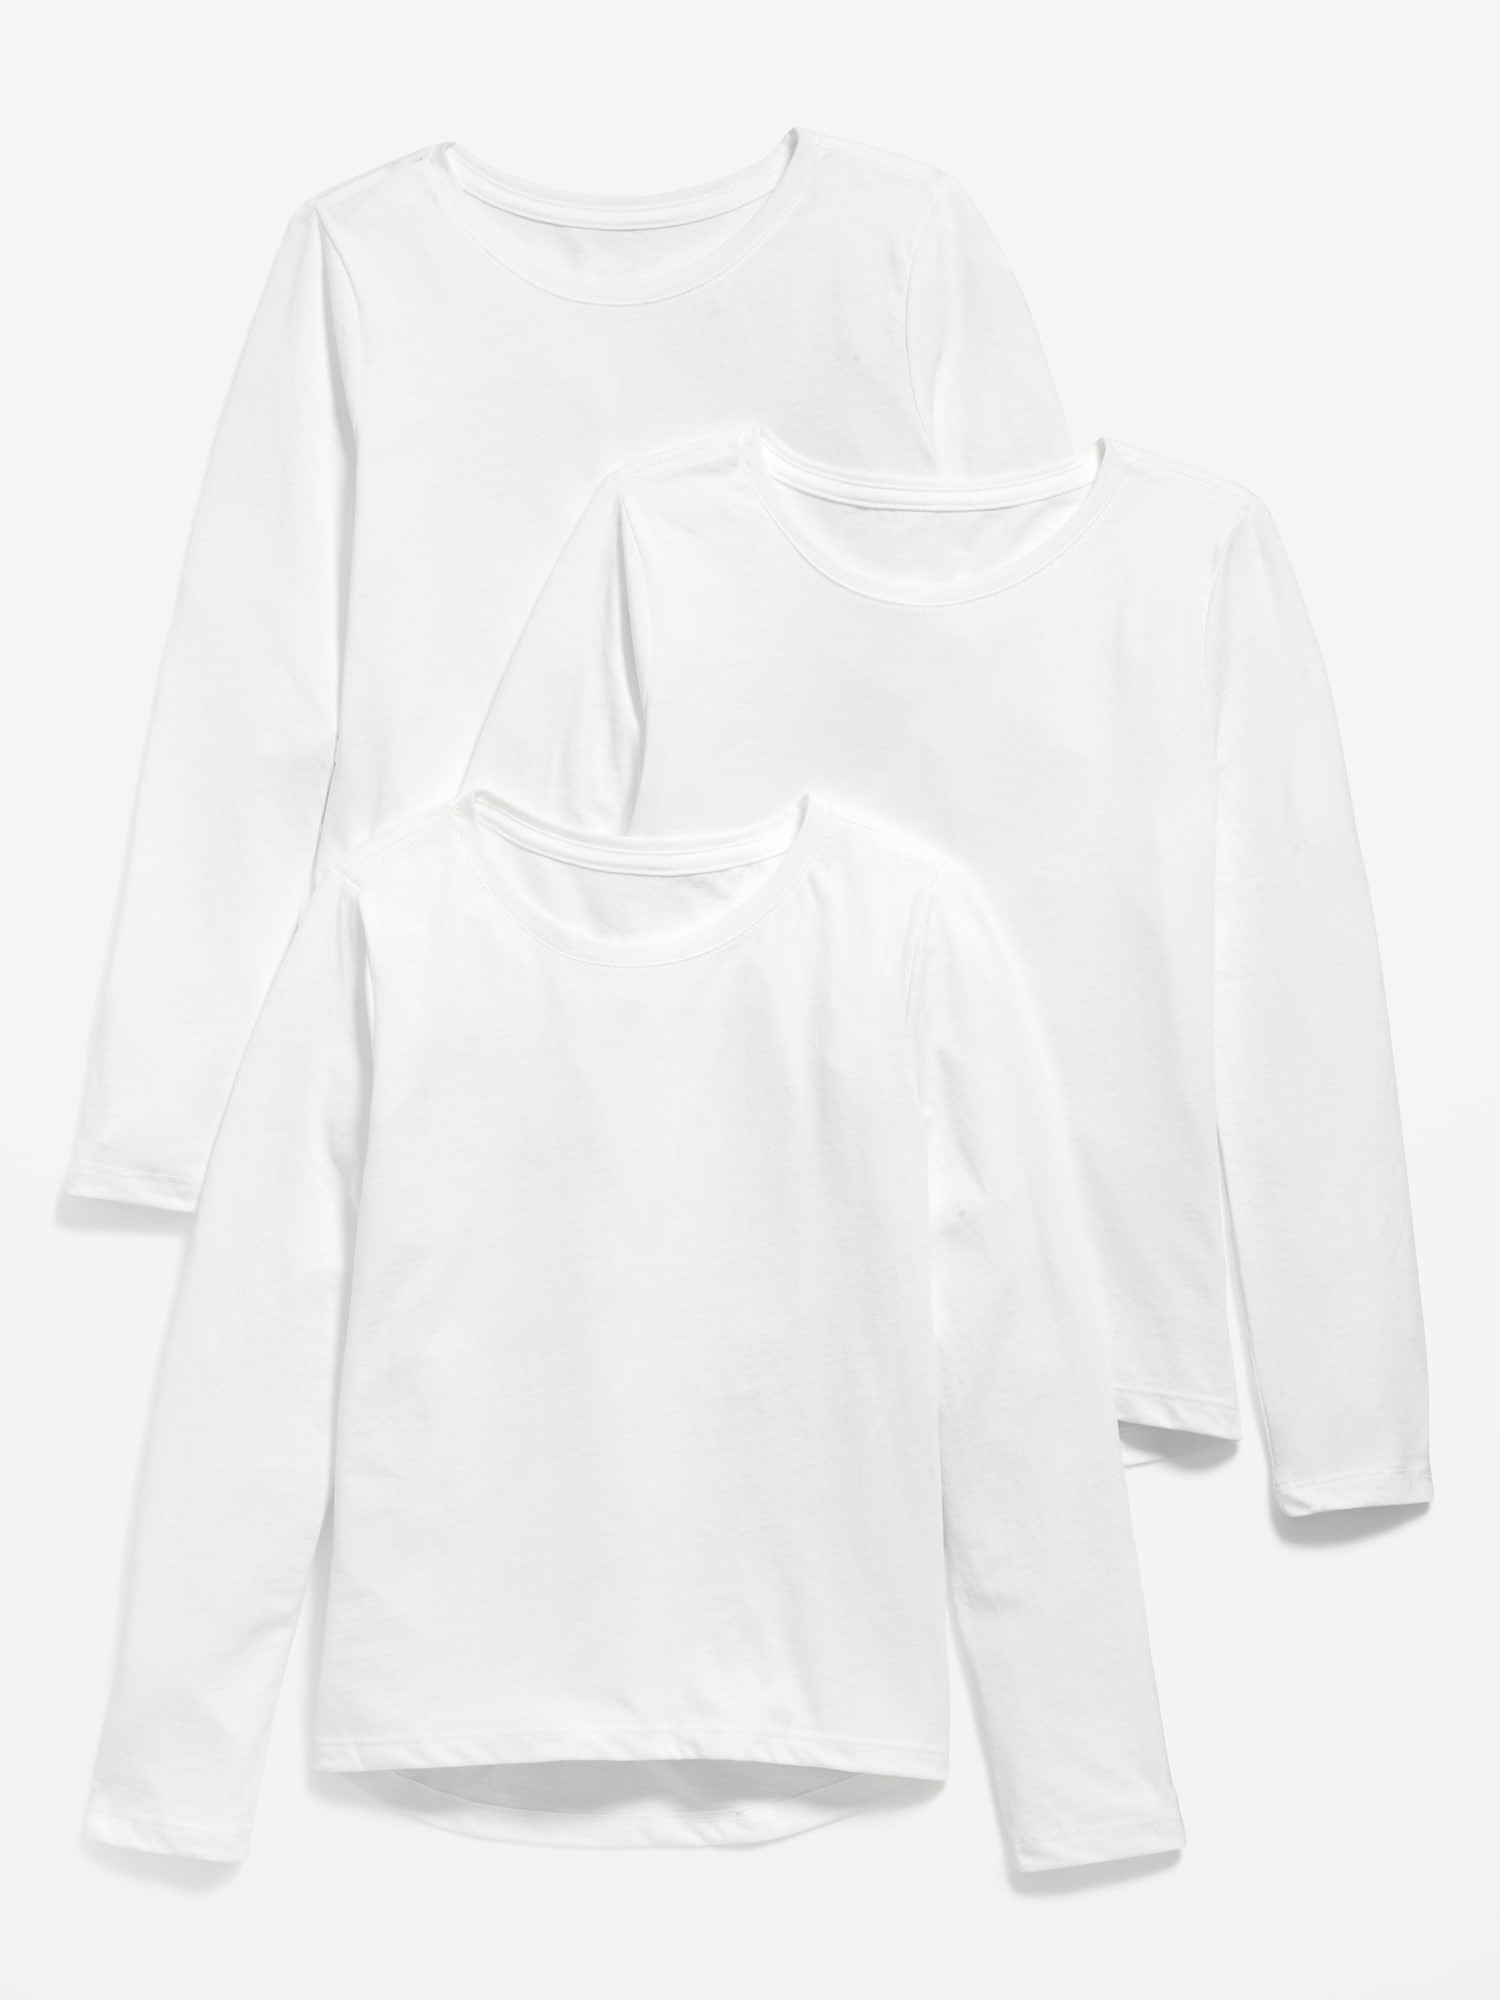 Girls Long Sleeve Shirts | Old Navy